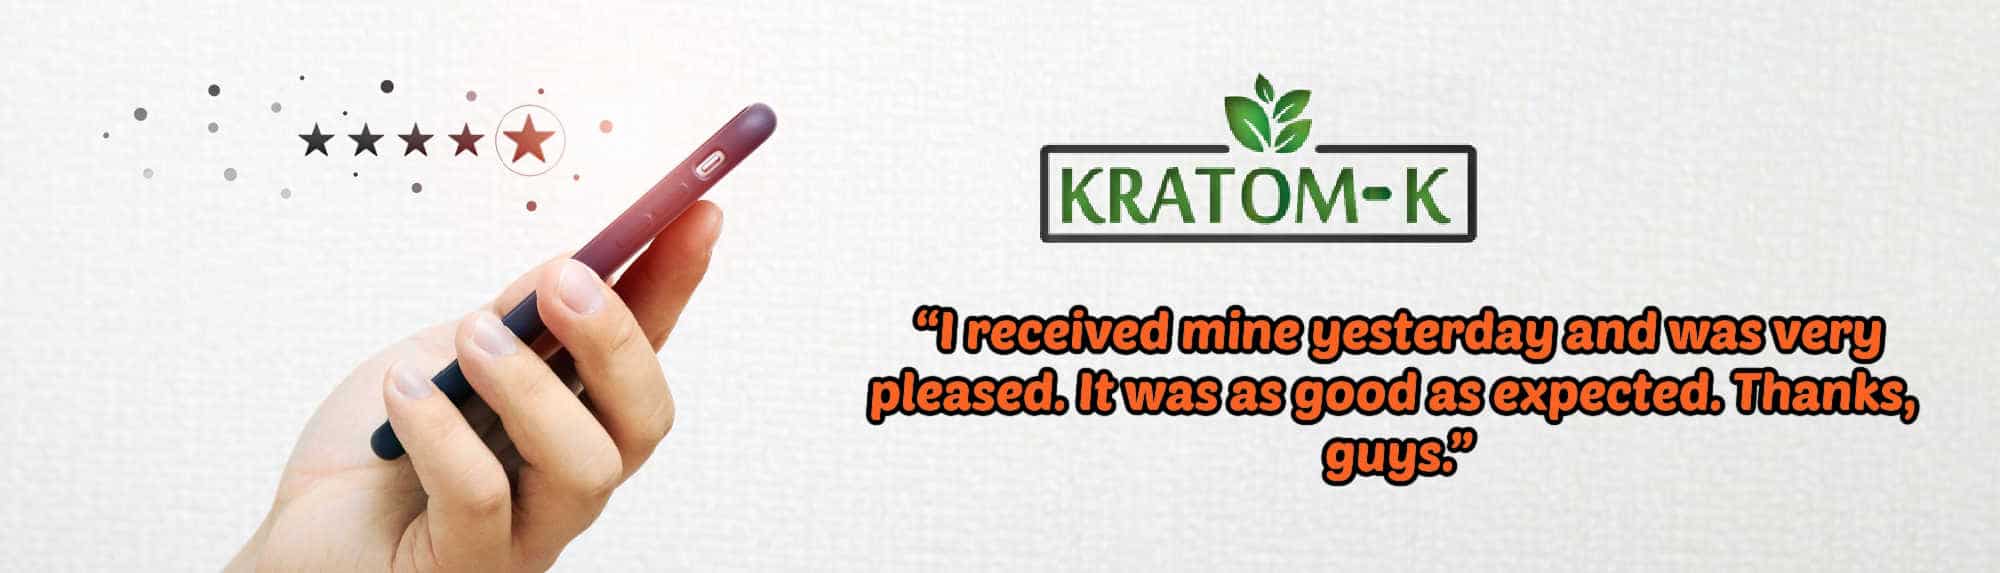 image of kratom k customer reviews